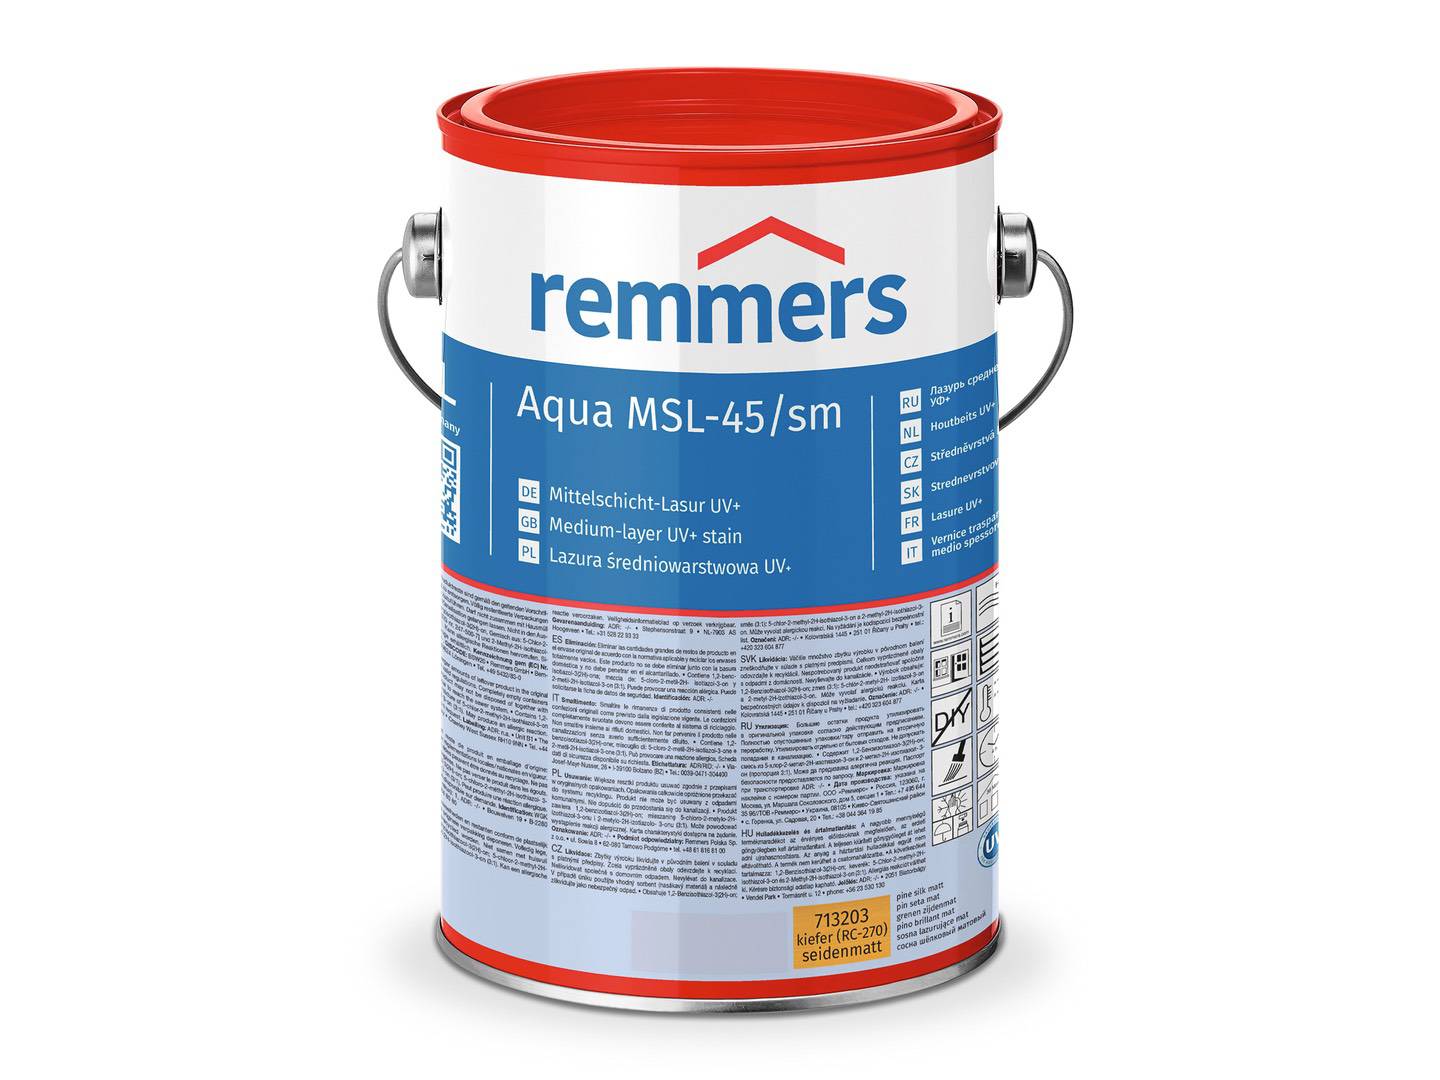 REMMERS Aqua MSL-45/sm-Mittelschicht-Lasur UV+ pinie/lärche (RC-260) 5 l